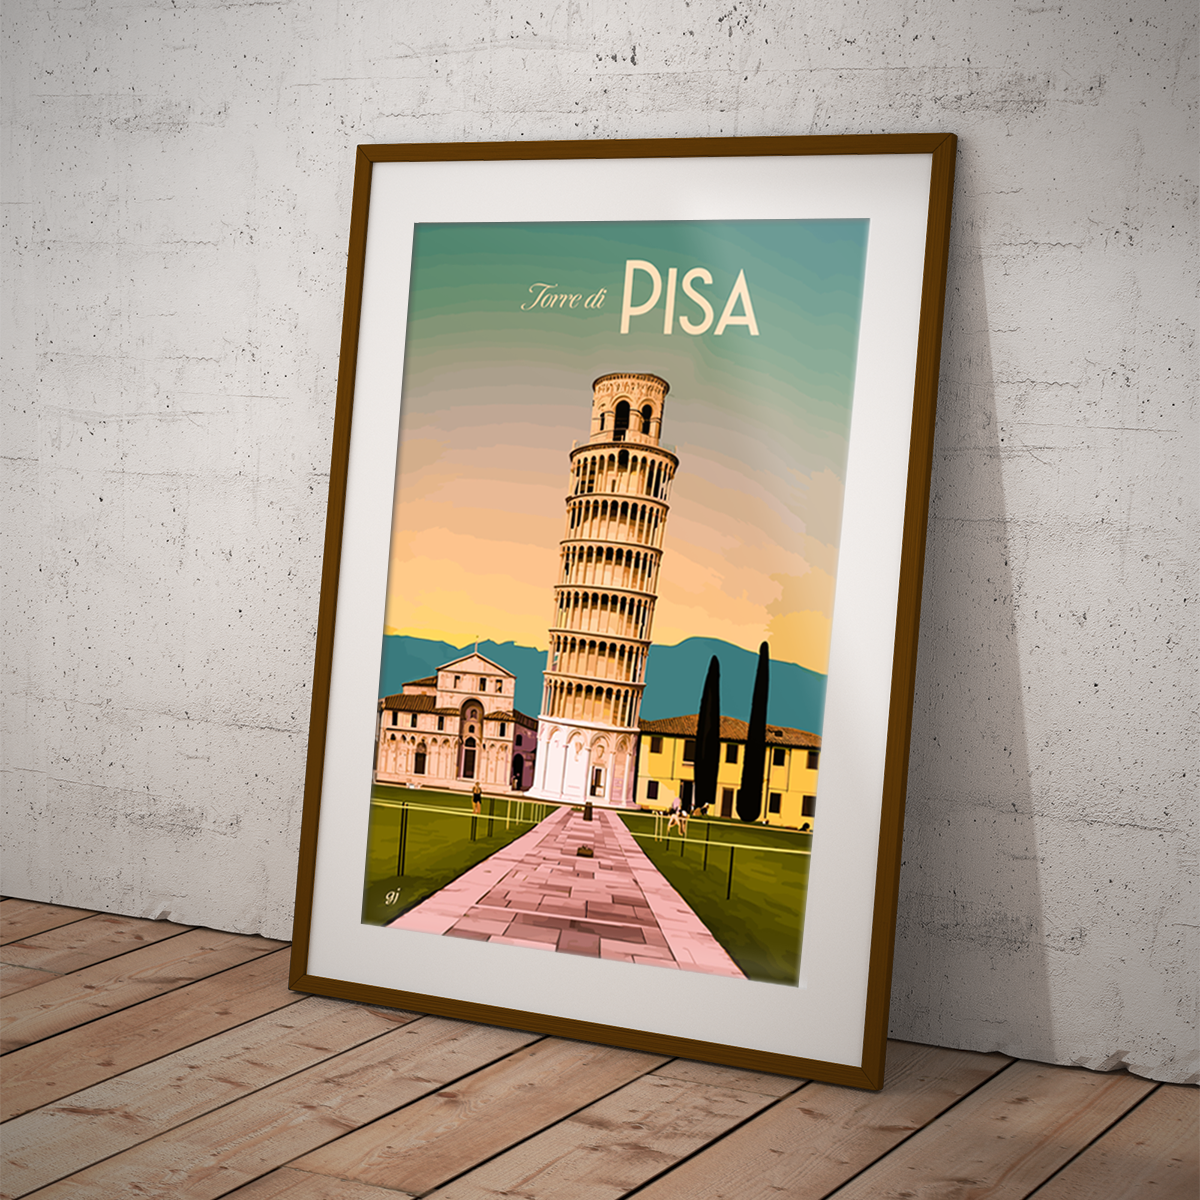 Pisa poster by bon voyage design